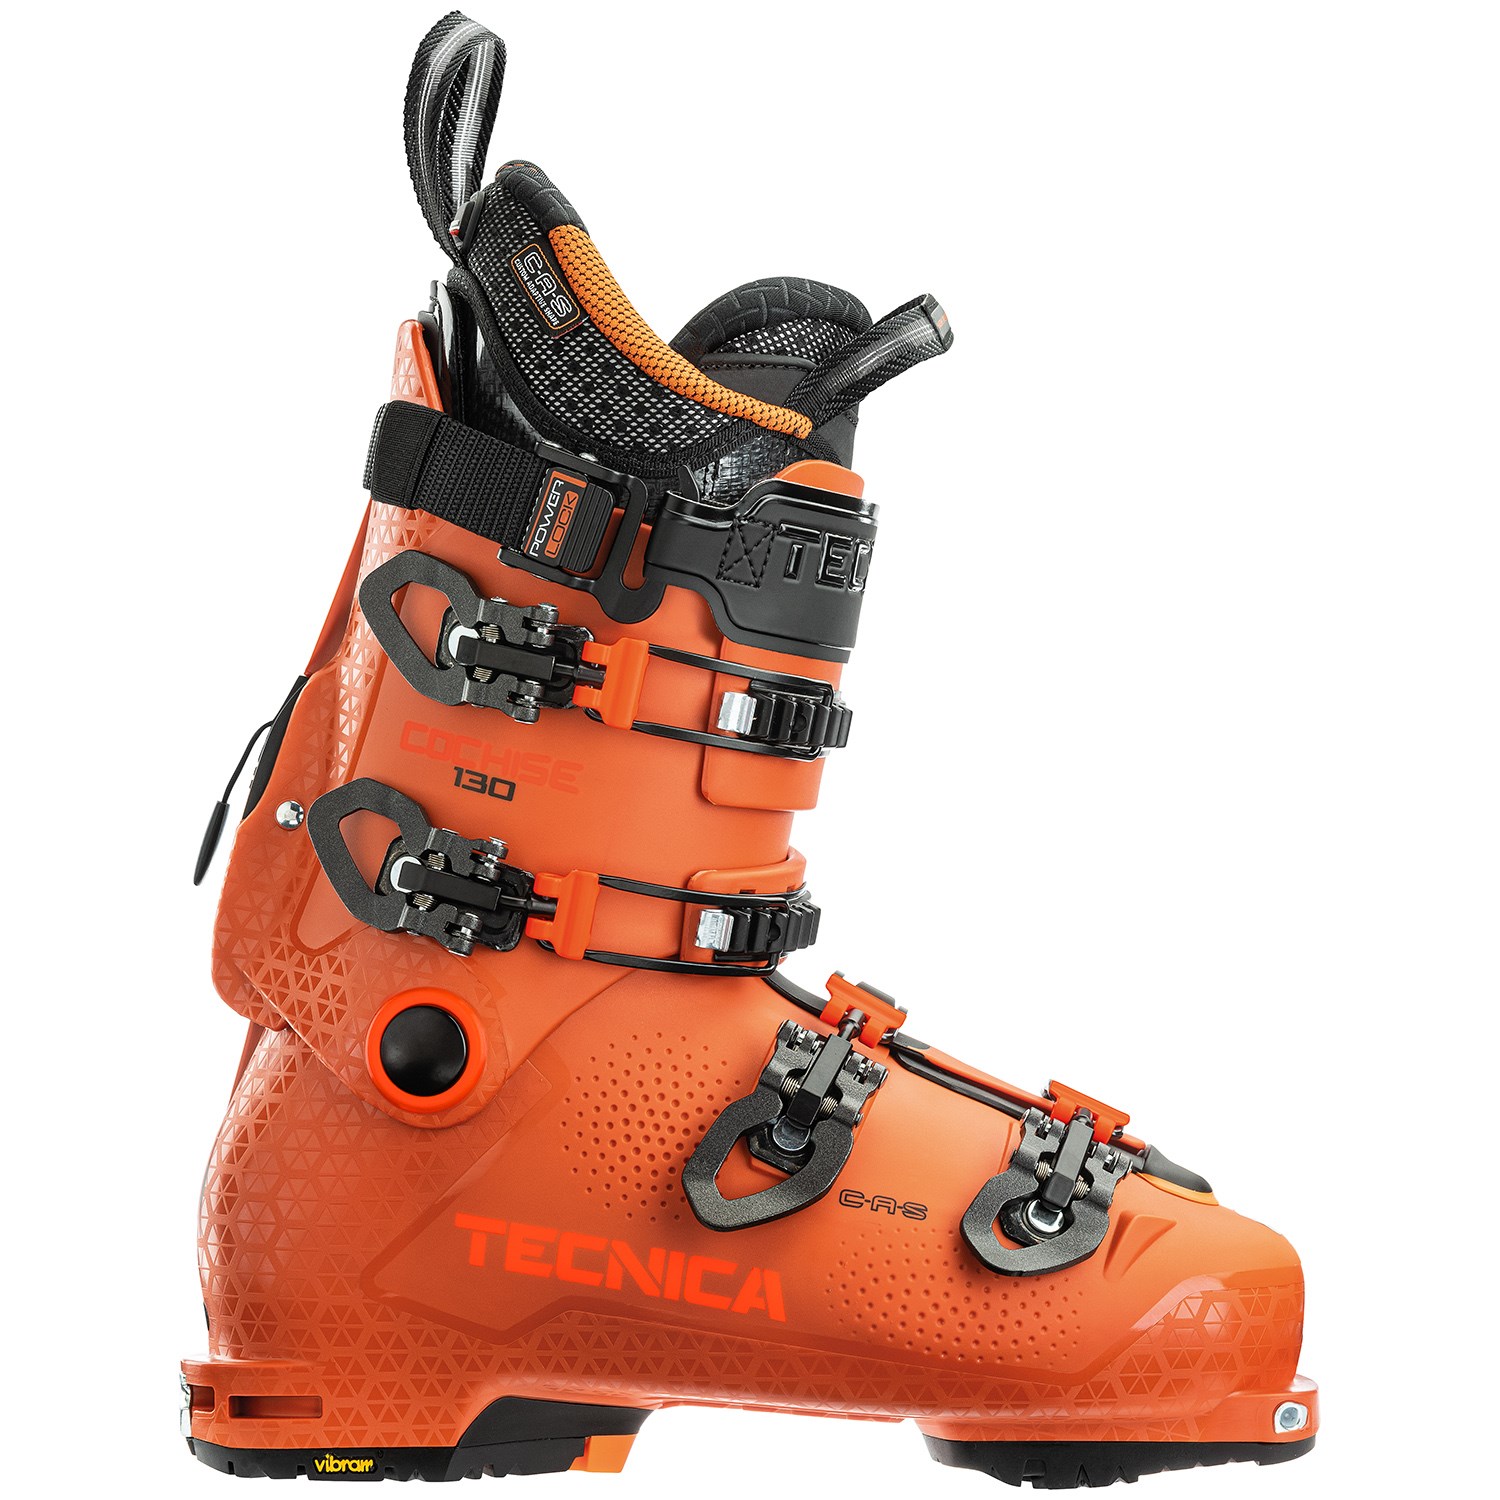 Tecnica Cochise 130 DYN GW Ski Boots for Men